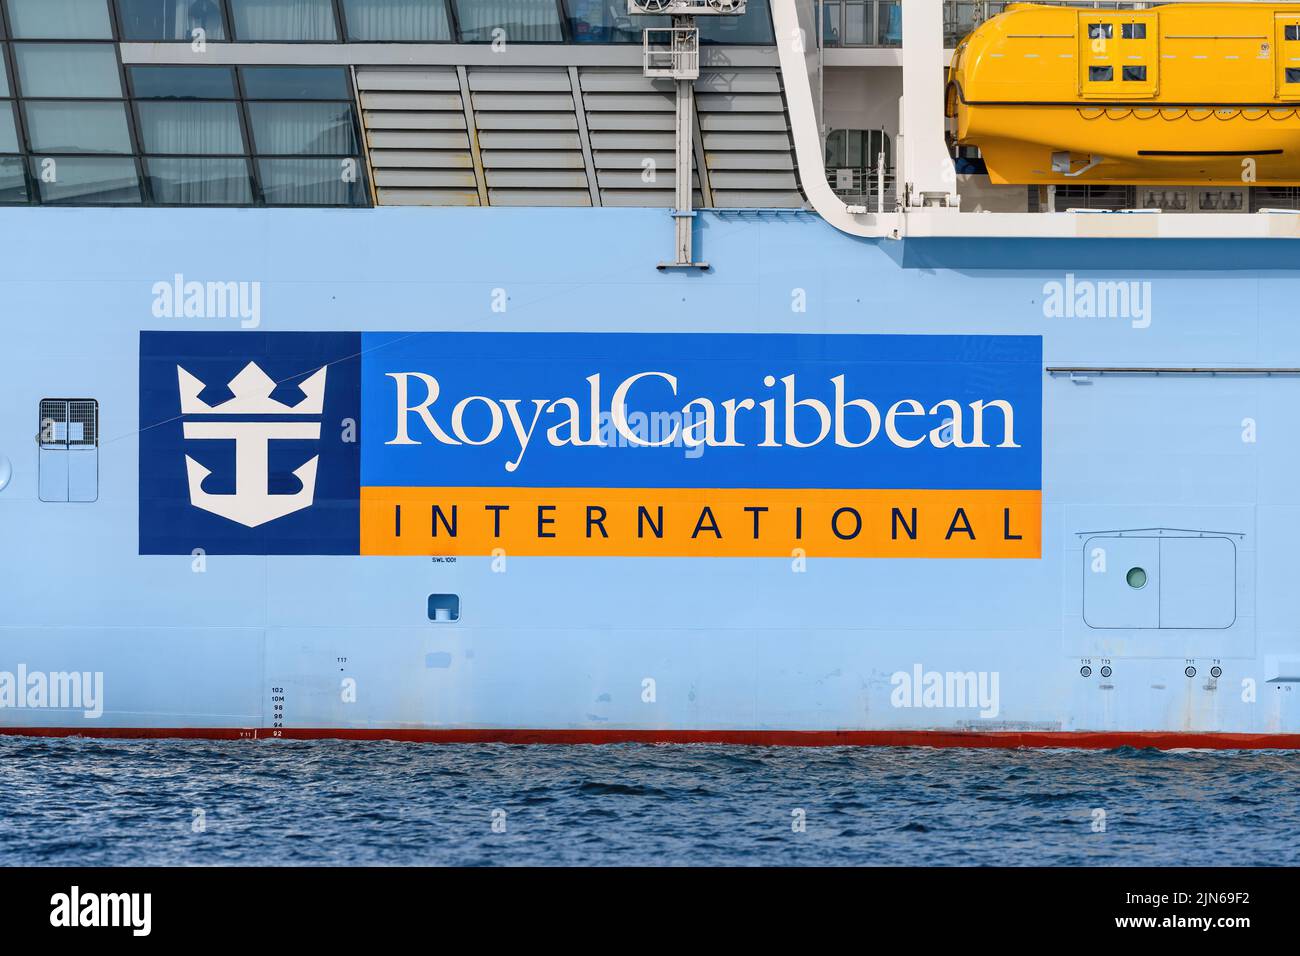 The Royal Caribbean International logo on the cruise ship Anthem of the Seas. Stock Photo